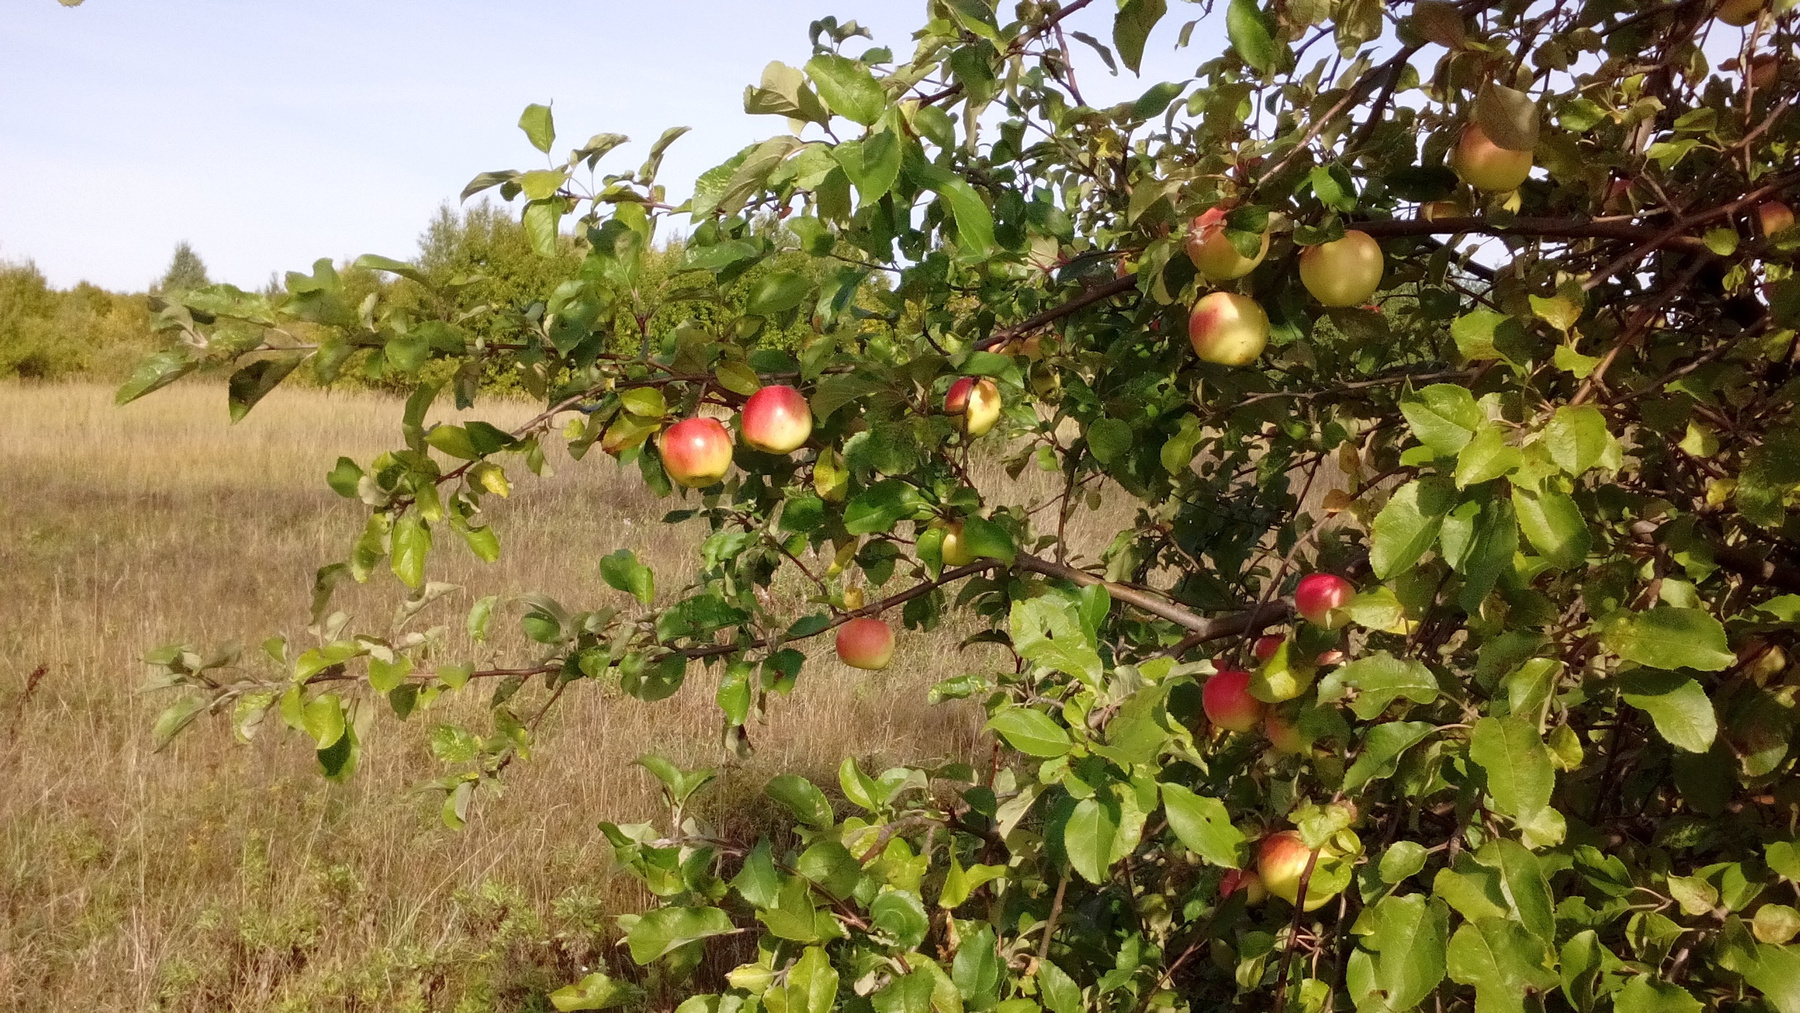 Яблоня у дороги яблоня дичек яблоки у дороги природа